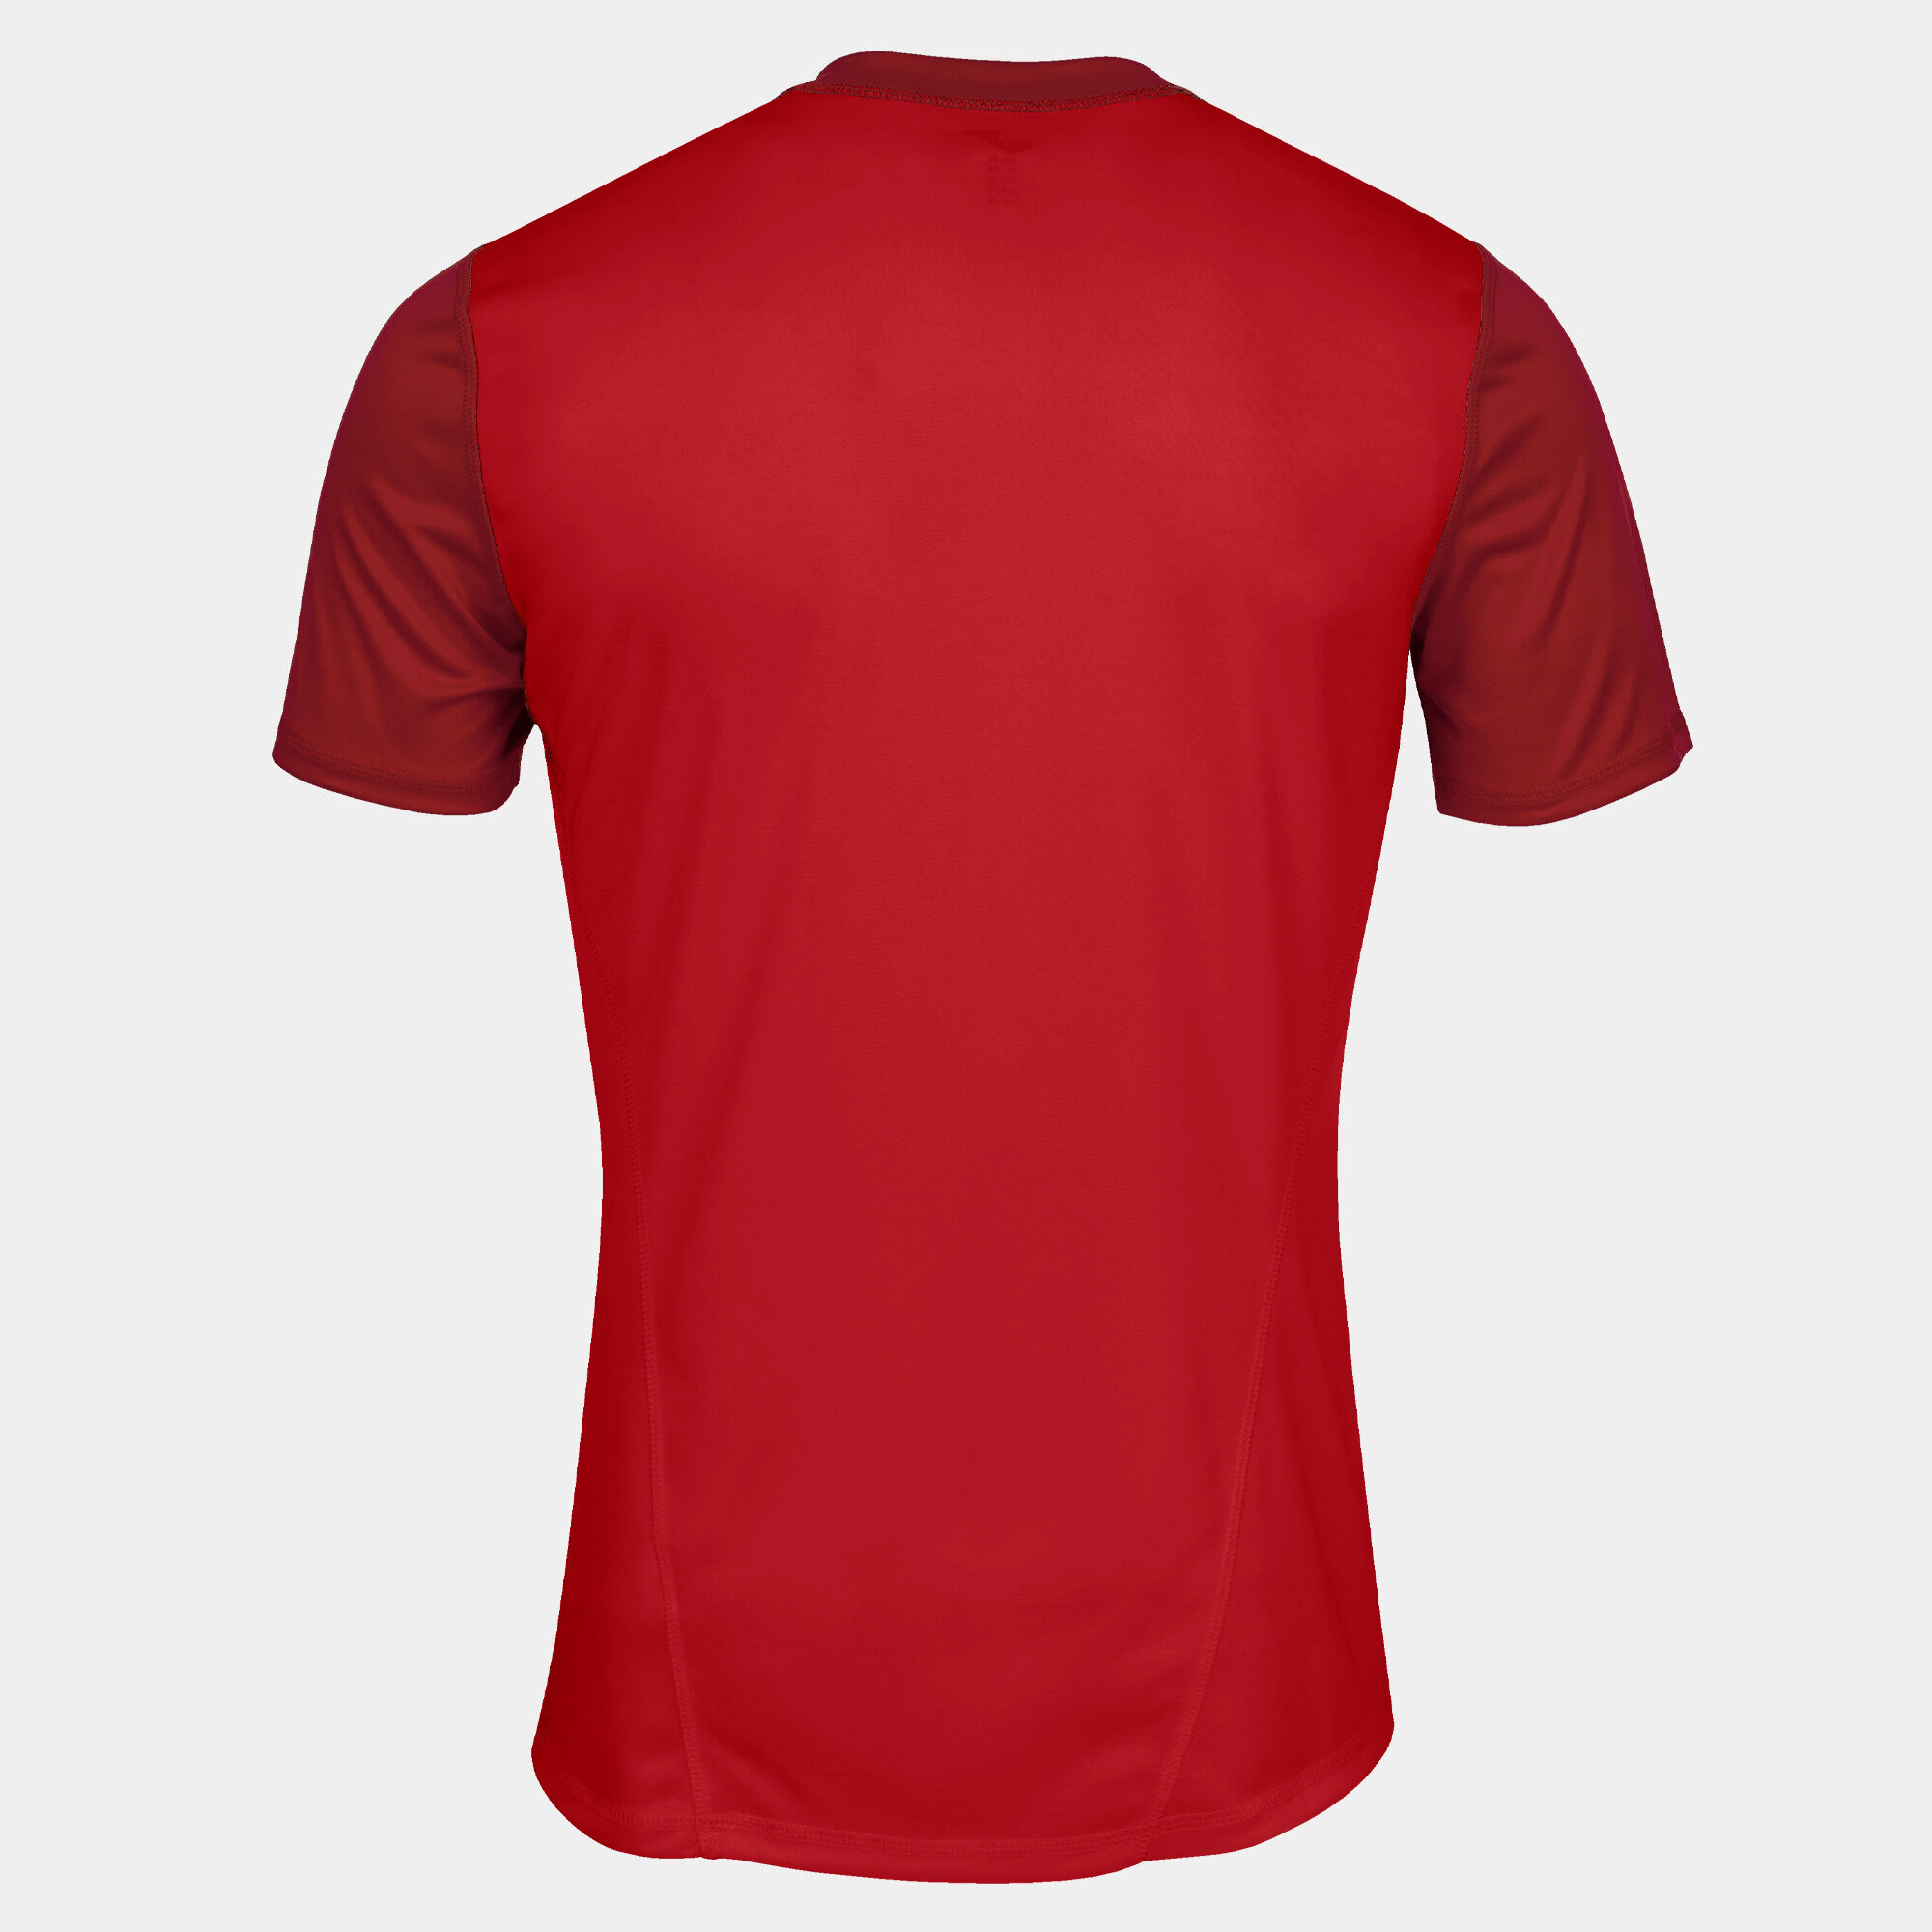 Camiseta manga corta hombre Hispa IV rojo